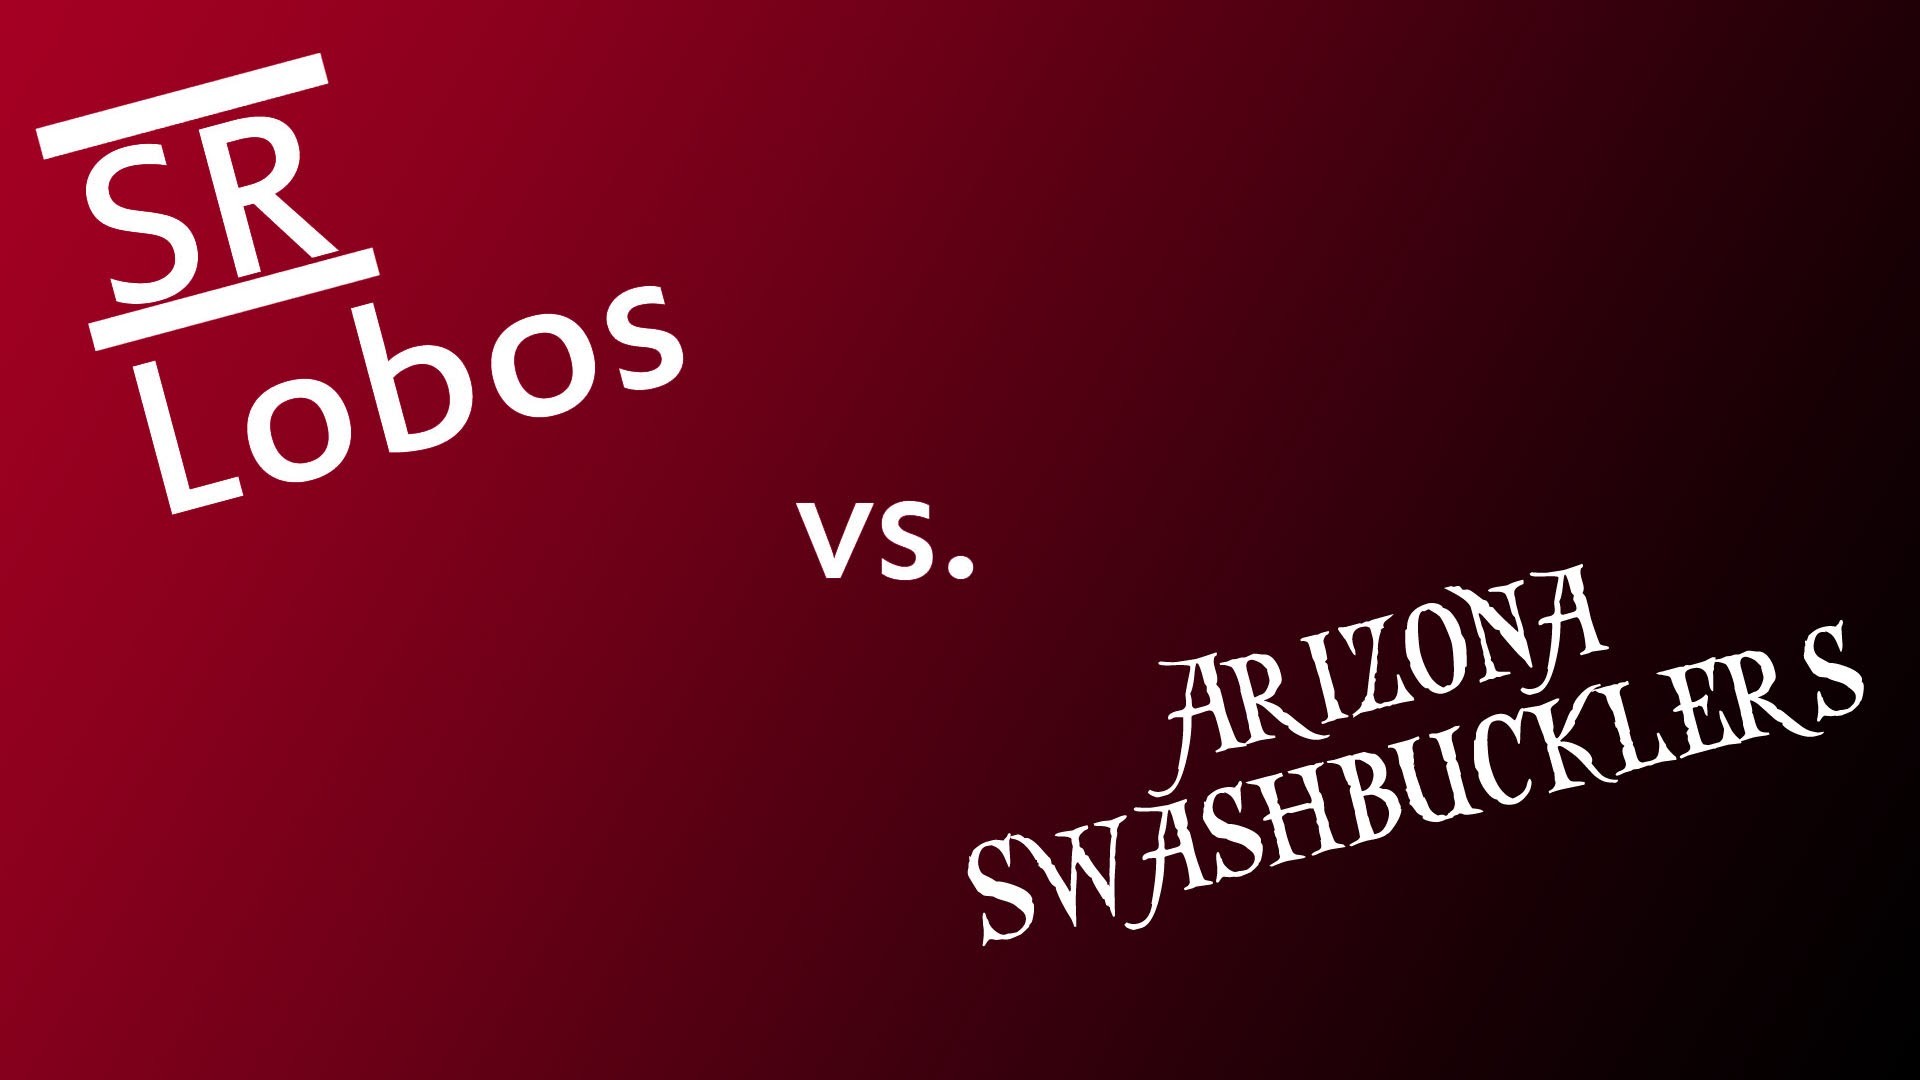 1920x1080 SR Lobos vs Arizona Swashbucklers